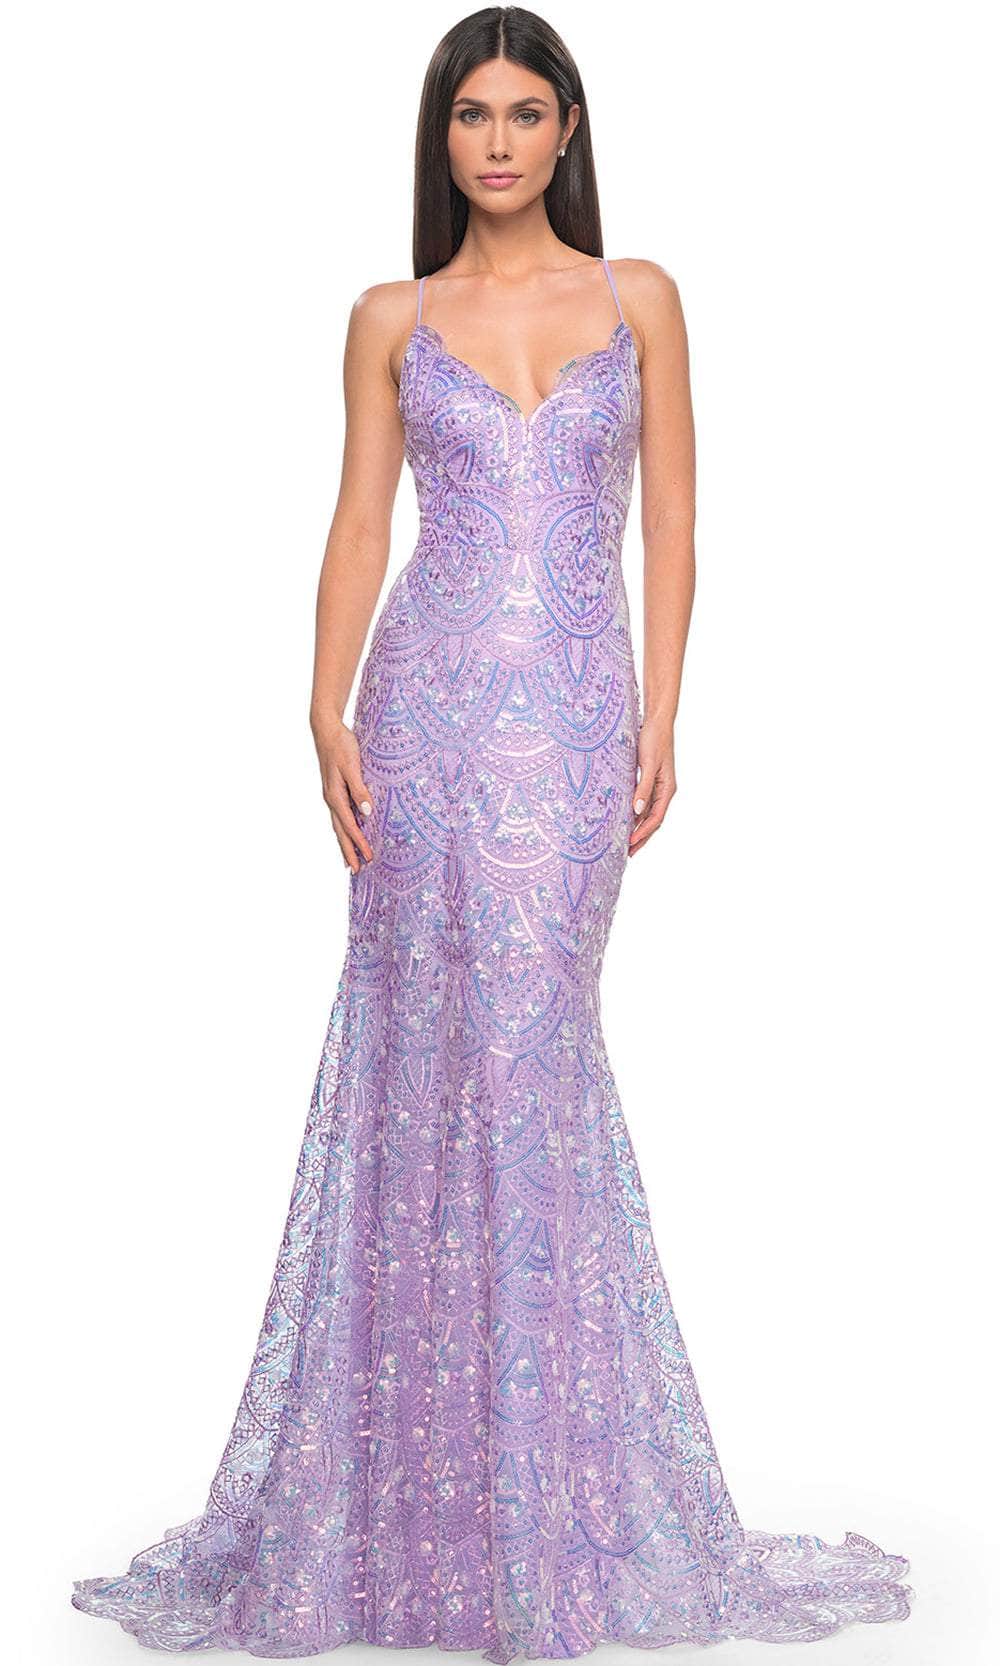 Image of La Femme 31865 - Sequin Mermaid Prom Dress